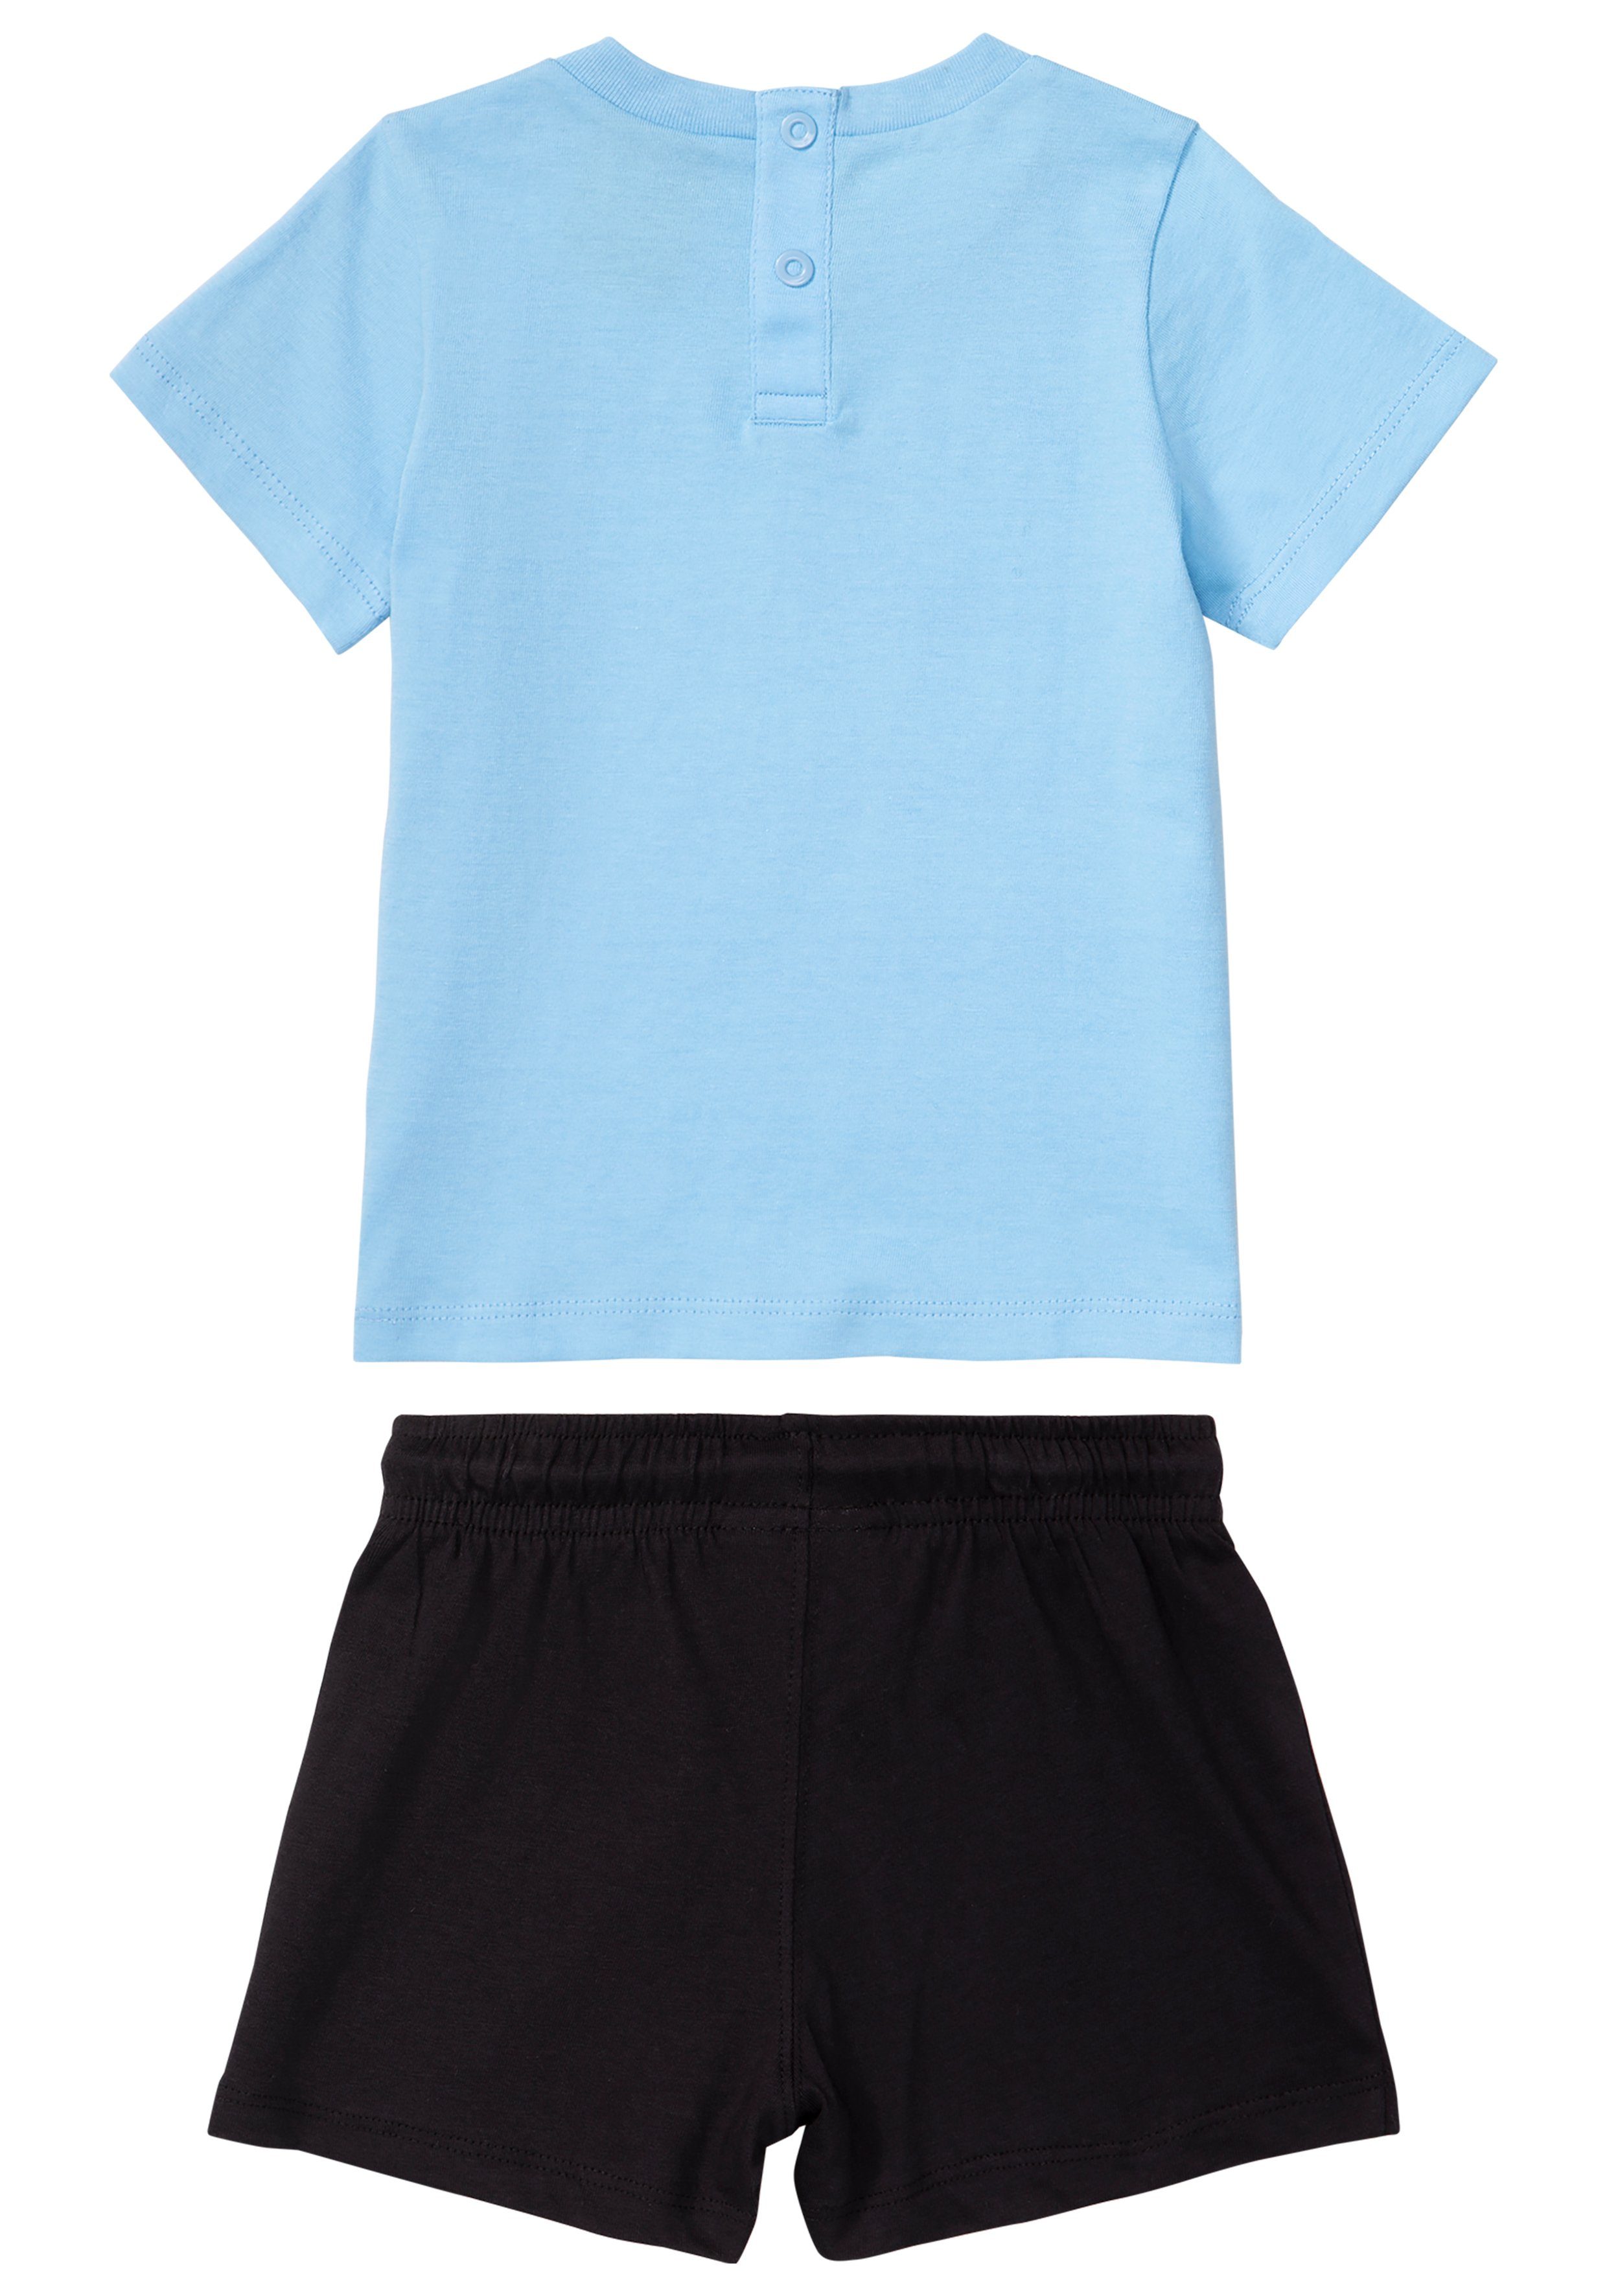 Champion T-shirt & short Icons Toddler Short Sleeve Set (2)